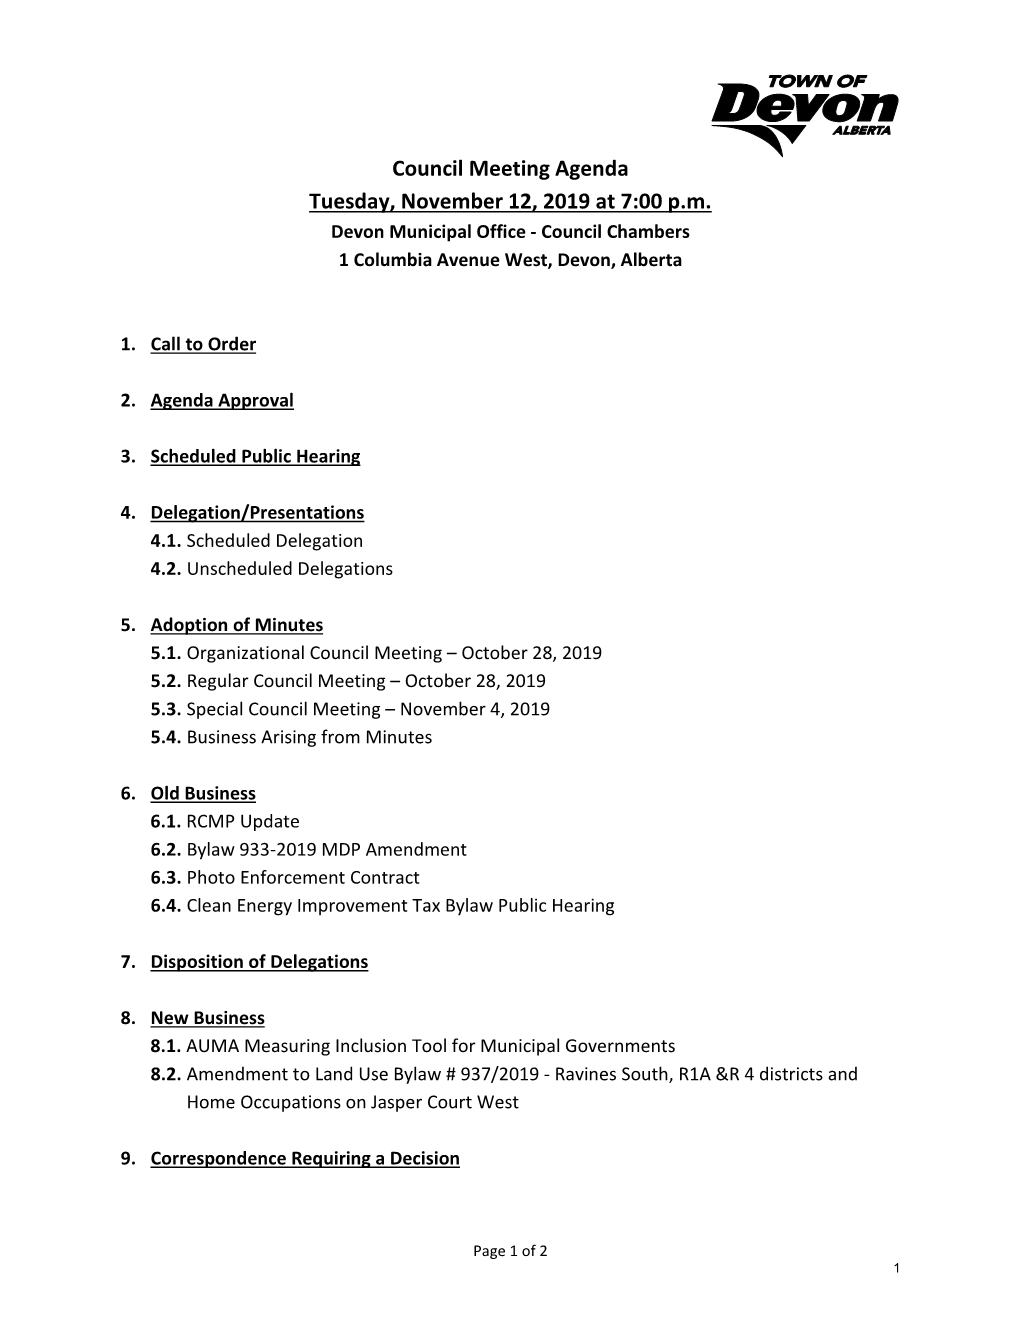 Council Meeting Agenda Tuesday, November 12, 2019 at 7:00 P.M. Devon Municipal Office - Council Chambers 1 Columbia Avenue West, Devon, Alberta